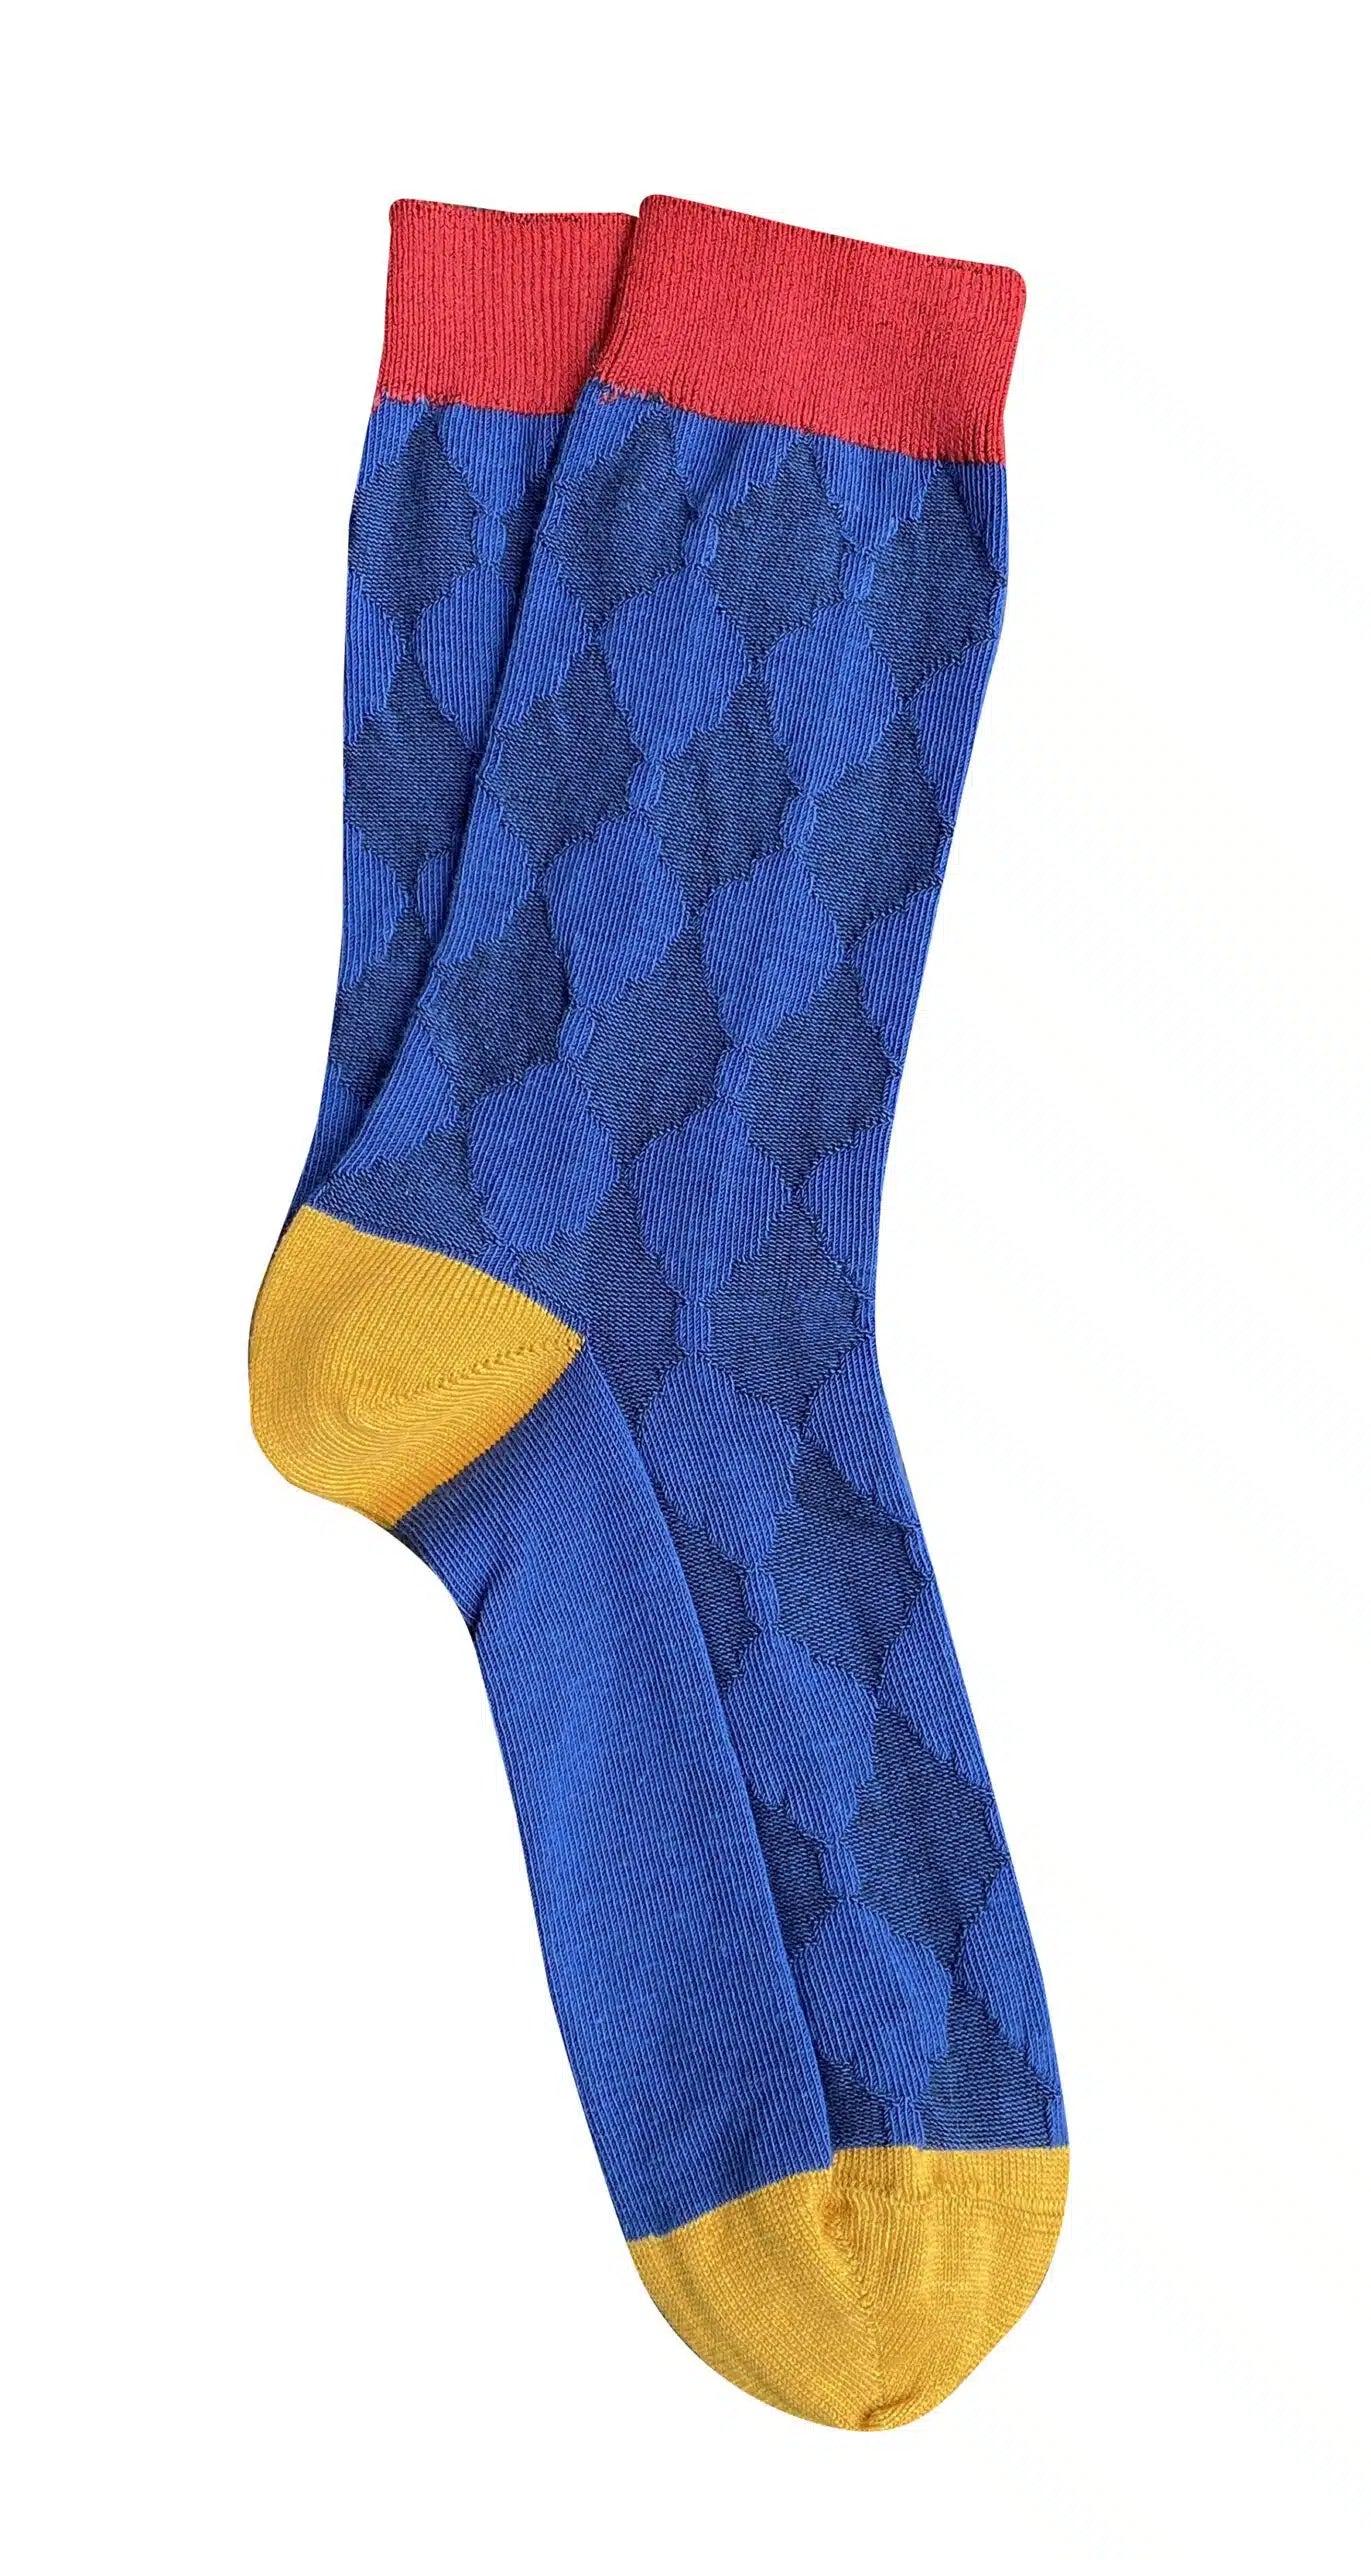 Tightology Odeon Socks in Blue